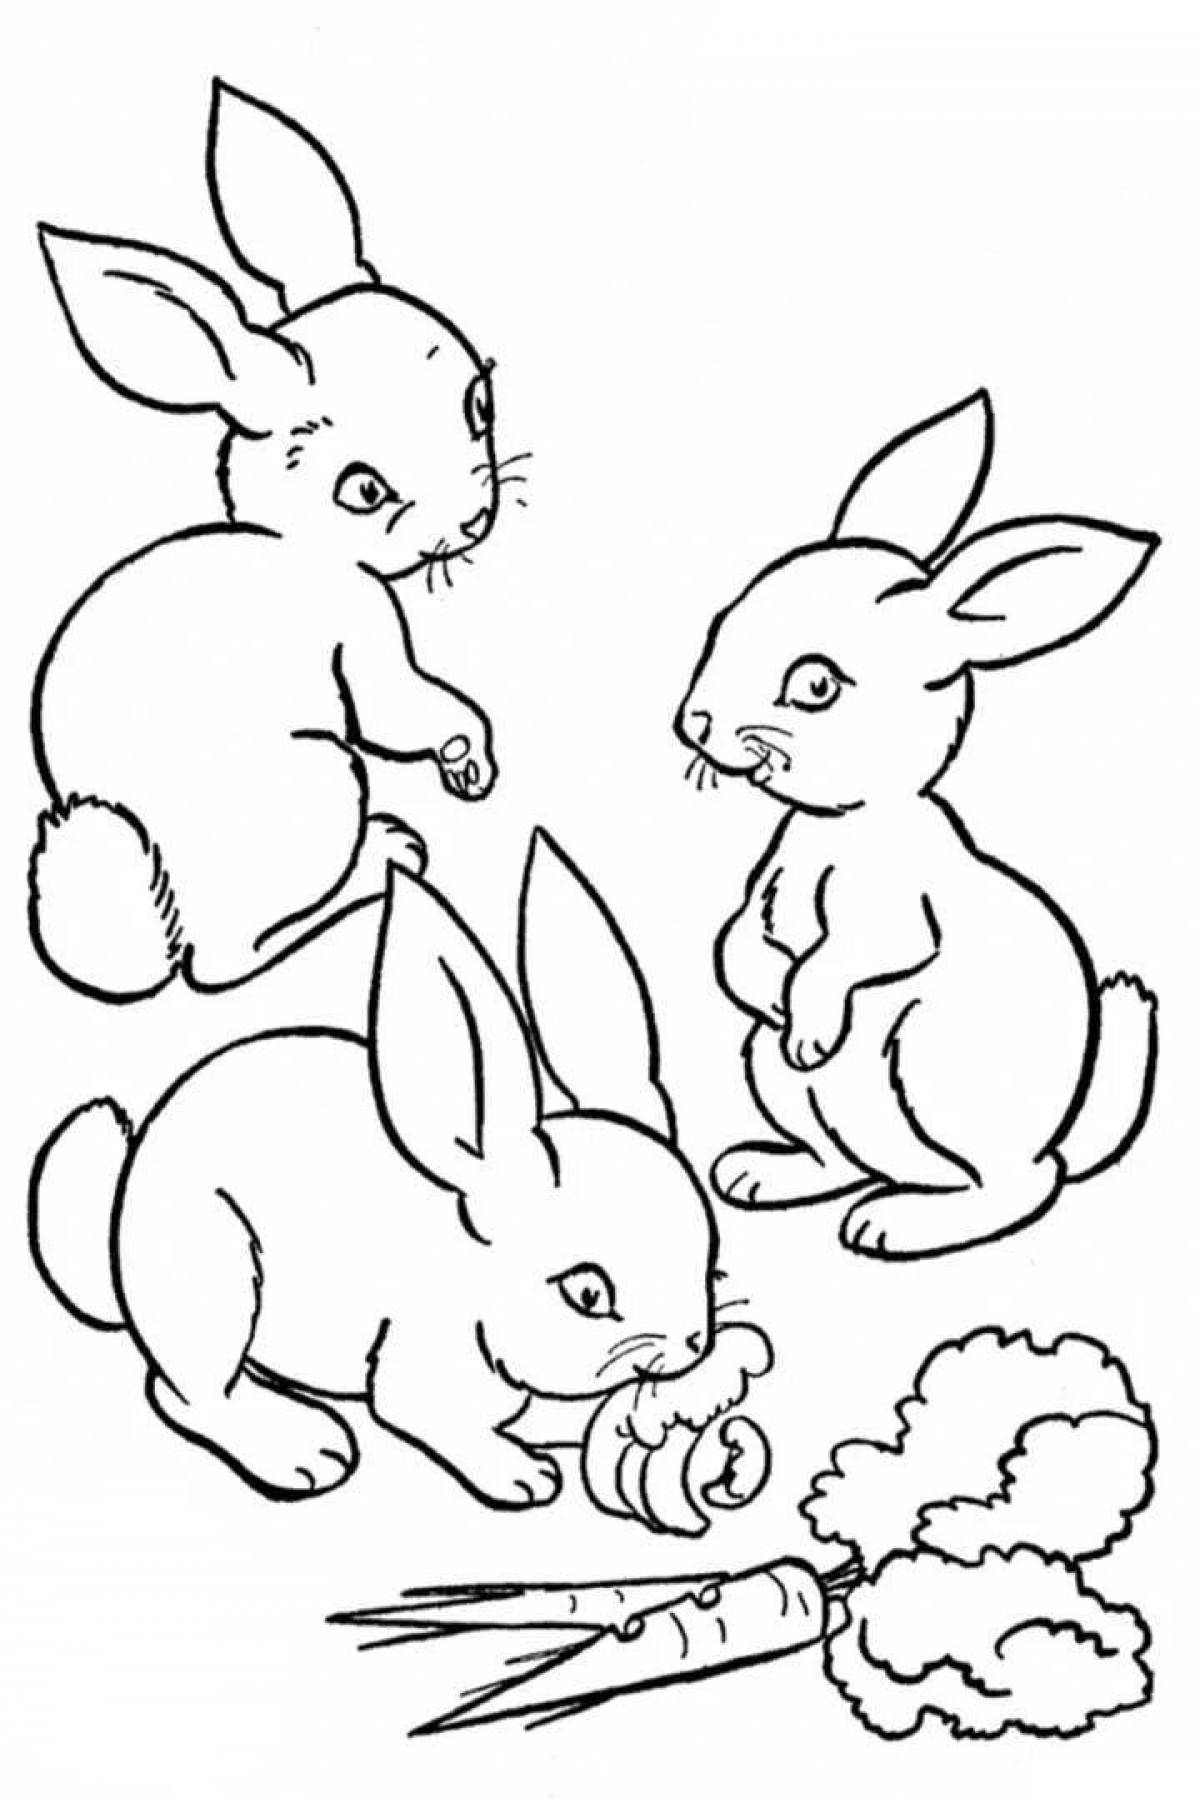 Fancy rabbit coloring book